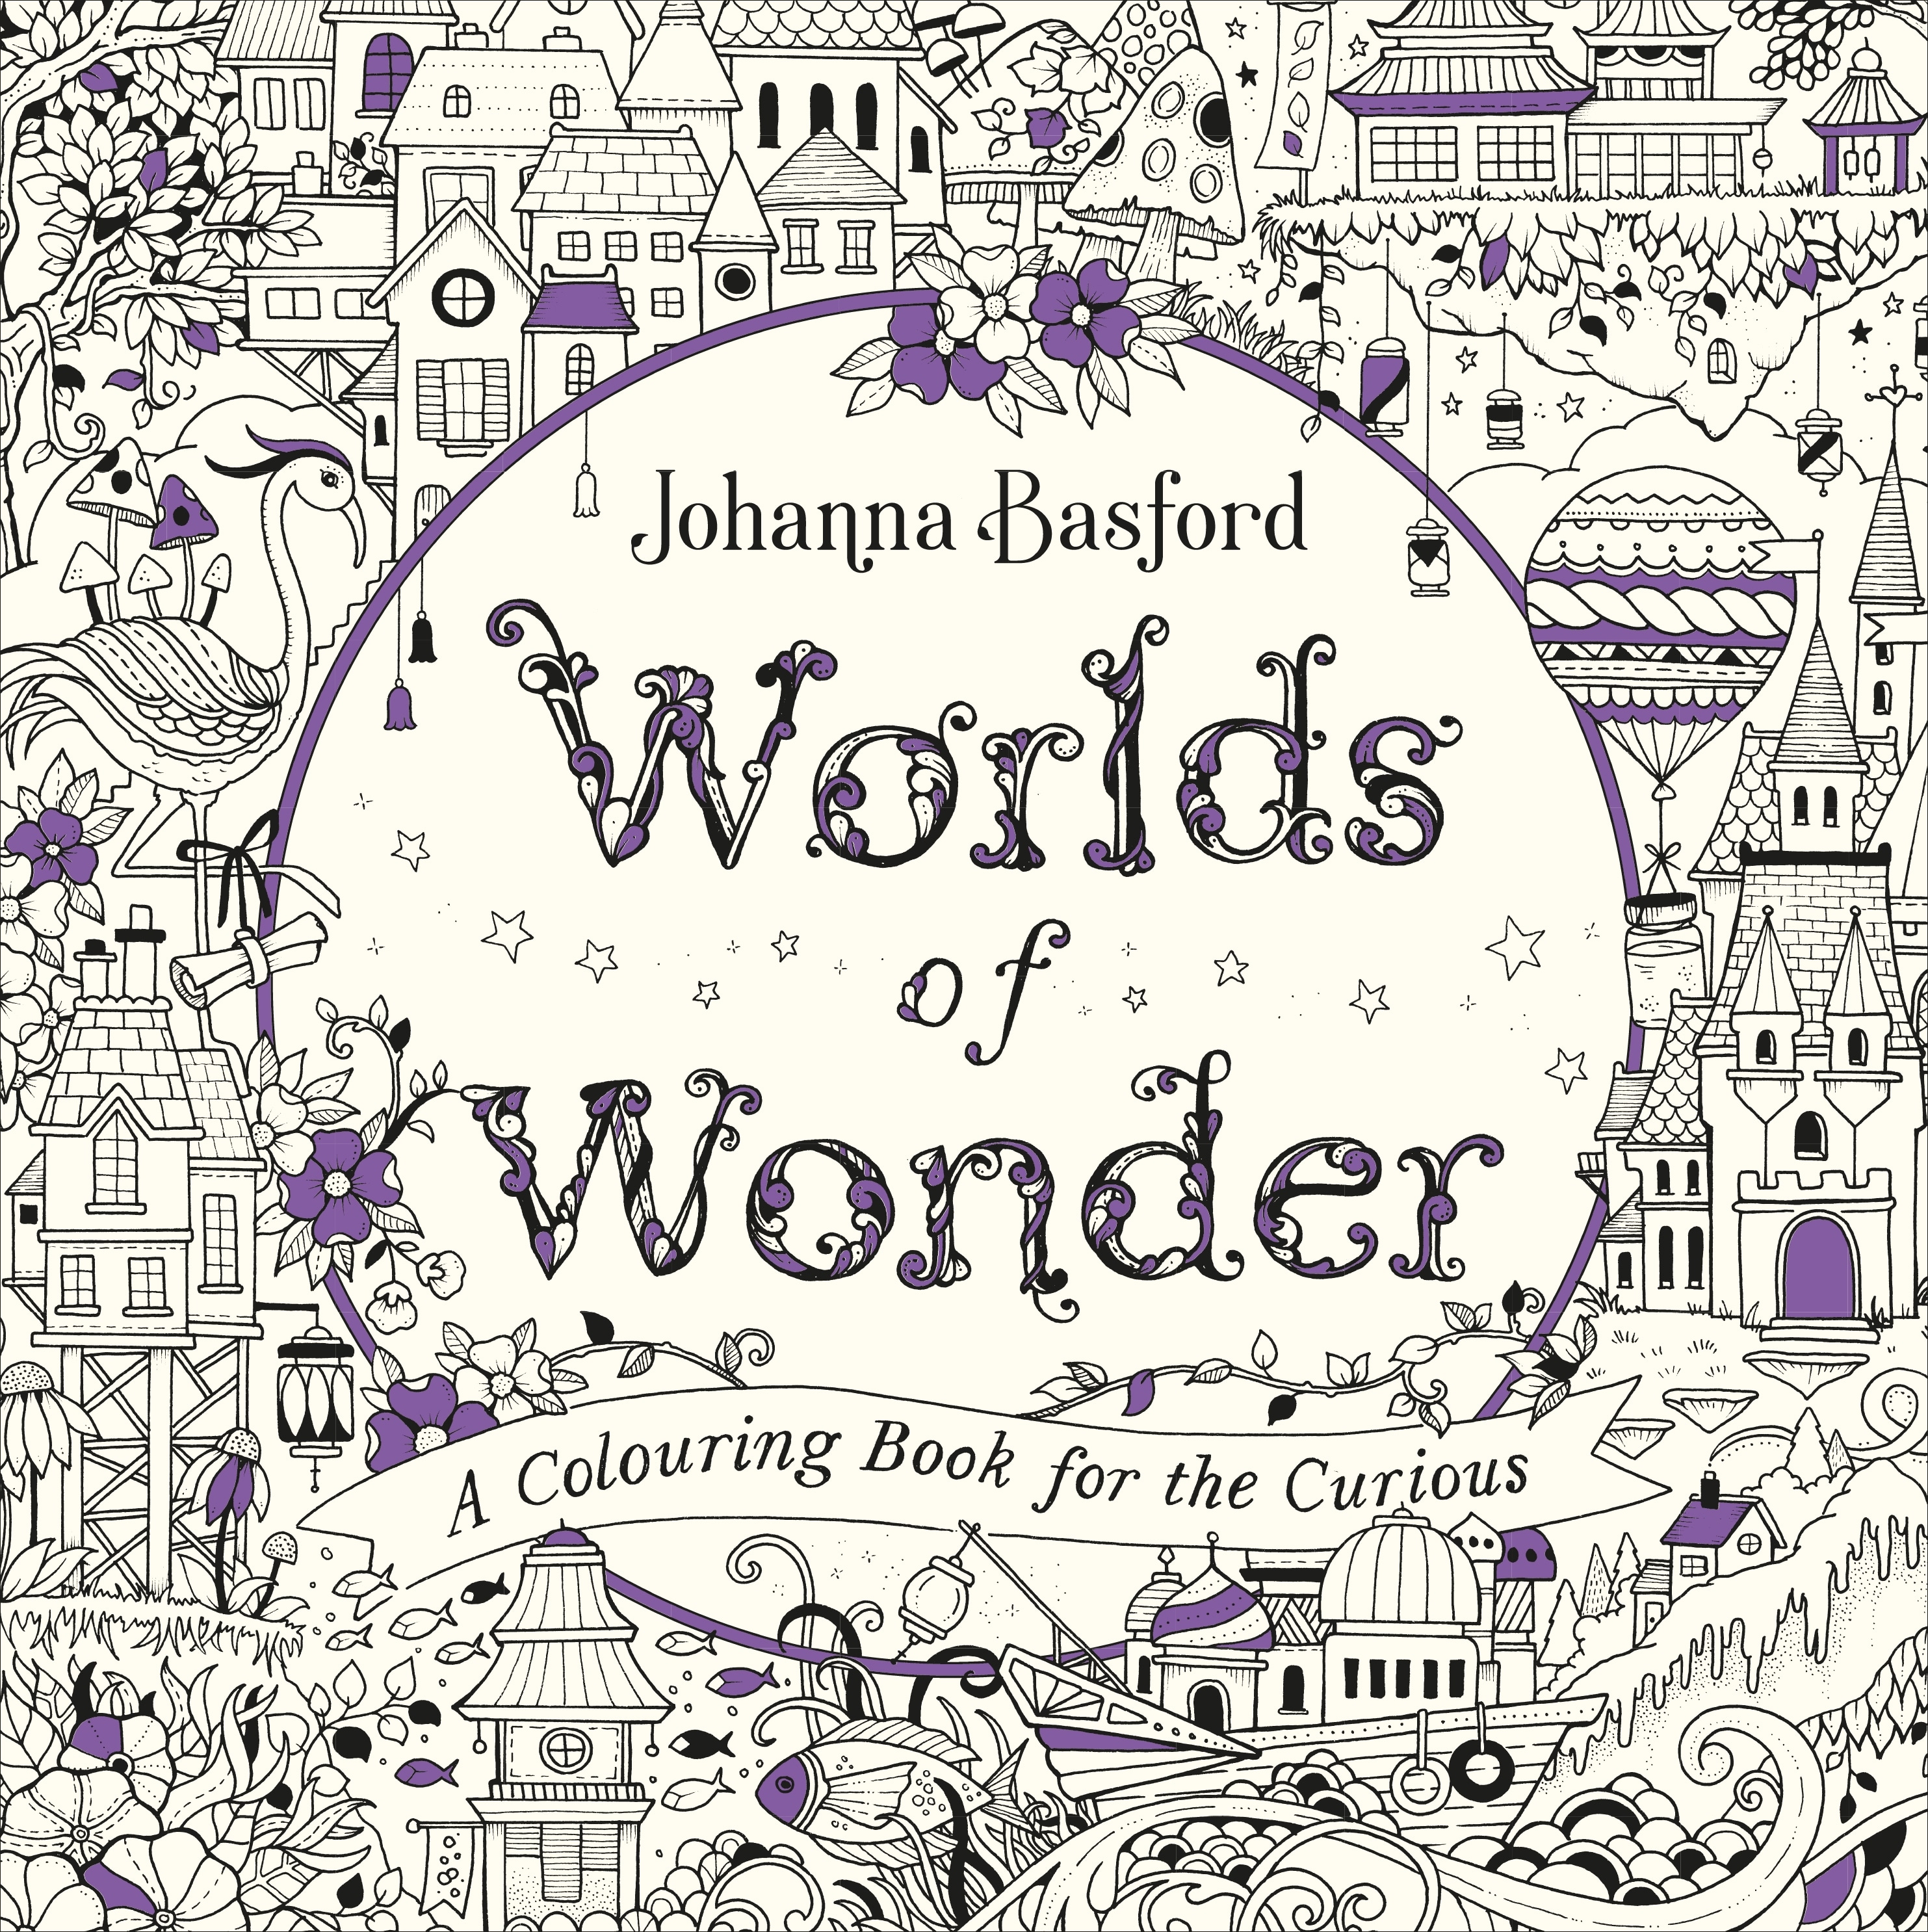 Book “Worlds of Wonder” by Johanna Basford — April 1, 2021